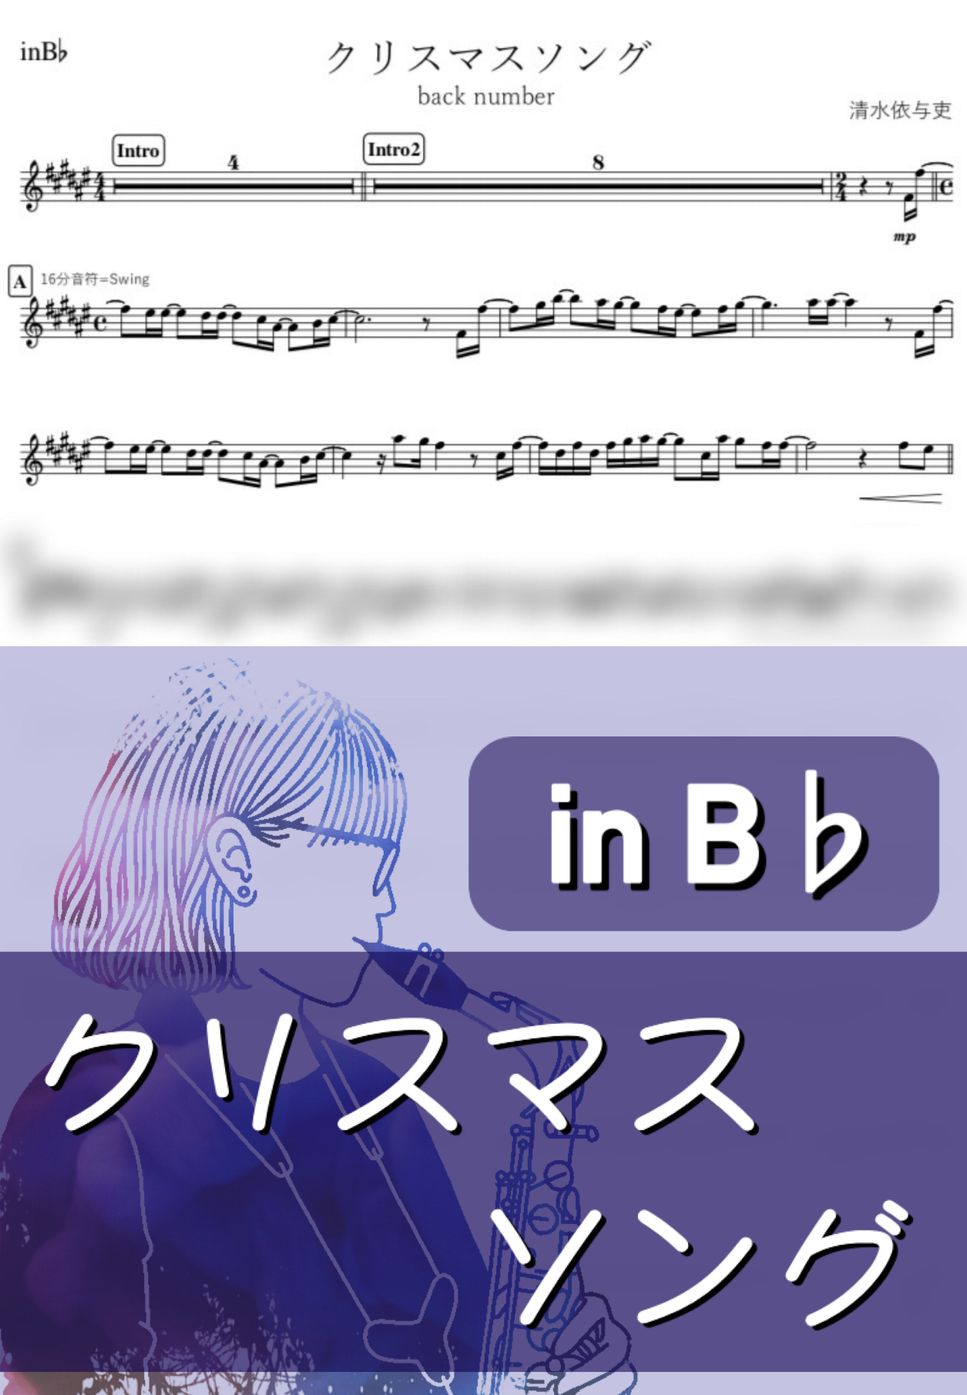 back number - クリスマスソング (B♭) by kanamusic